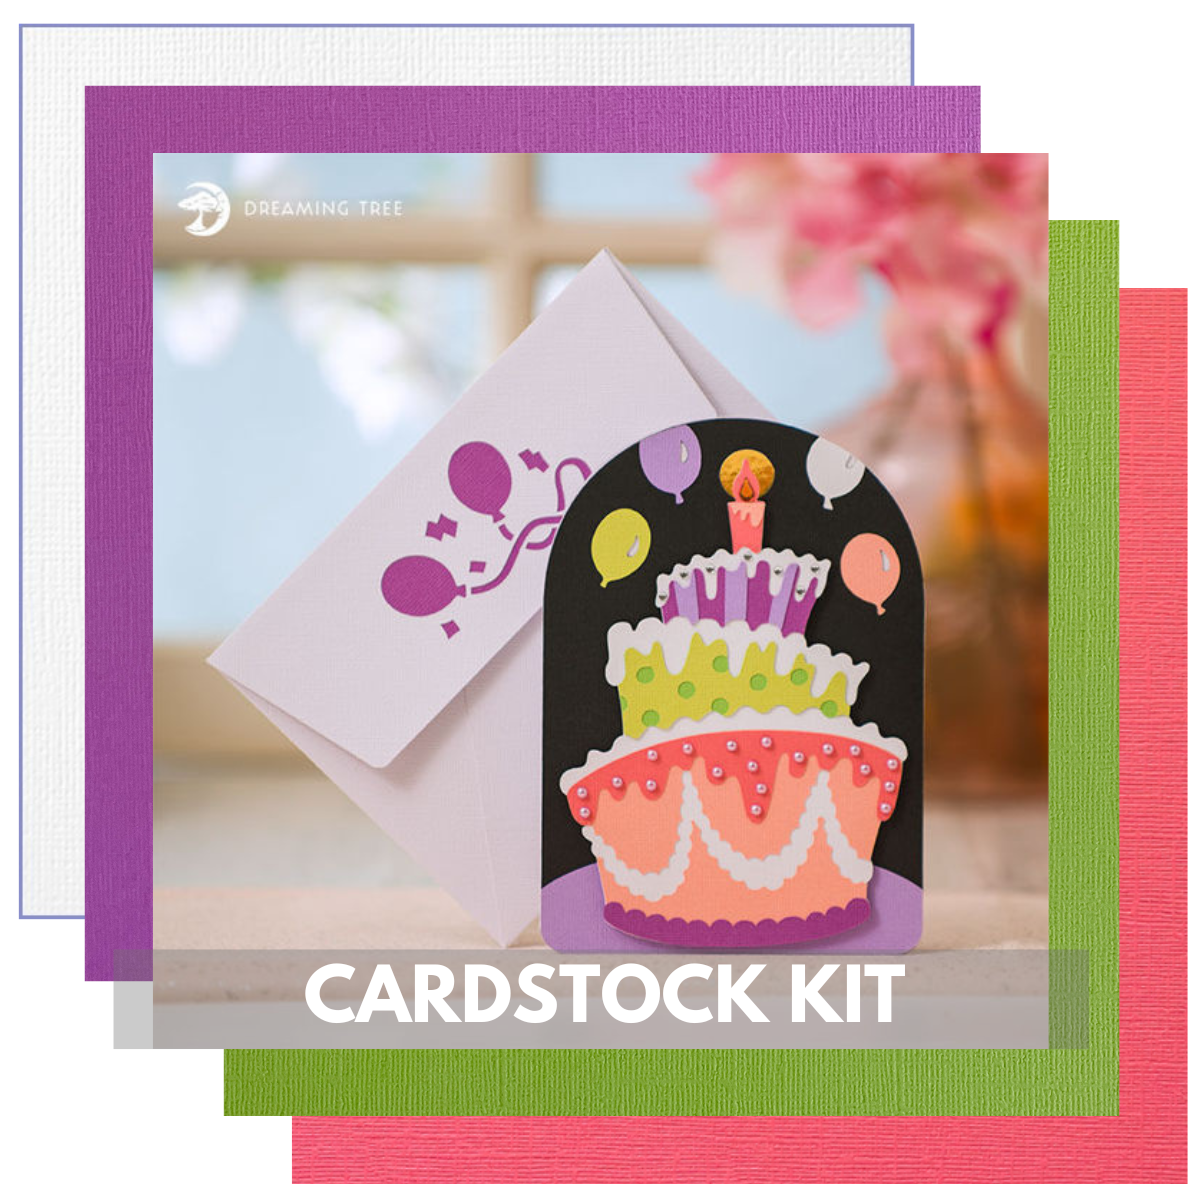 DREAMING TREE BIRTHDAY CAKE CARD KIT - 11 Sheets